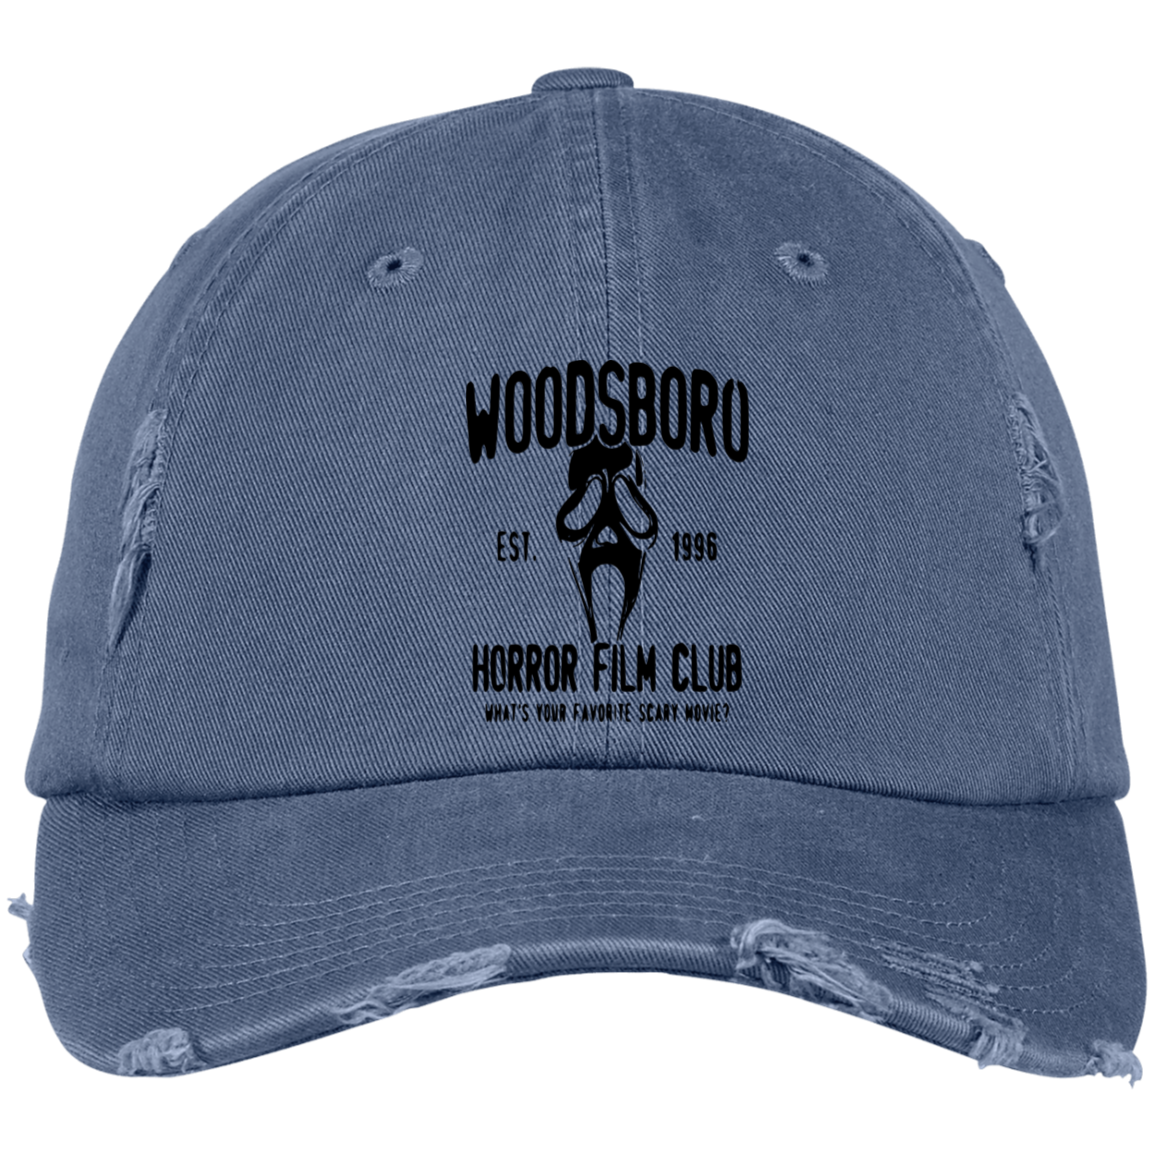 Woodsboro Embroidered Distressed Dad Cap